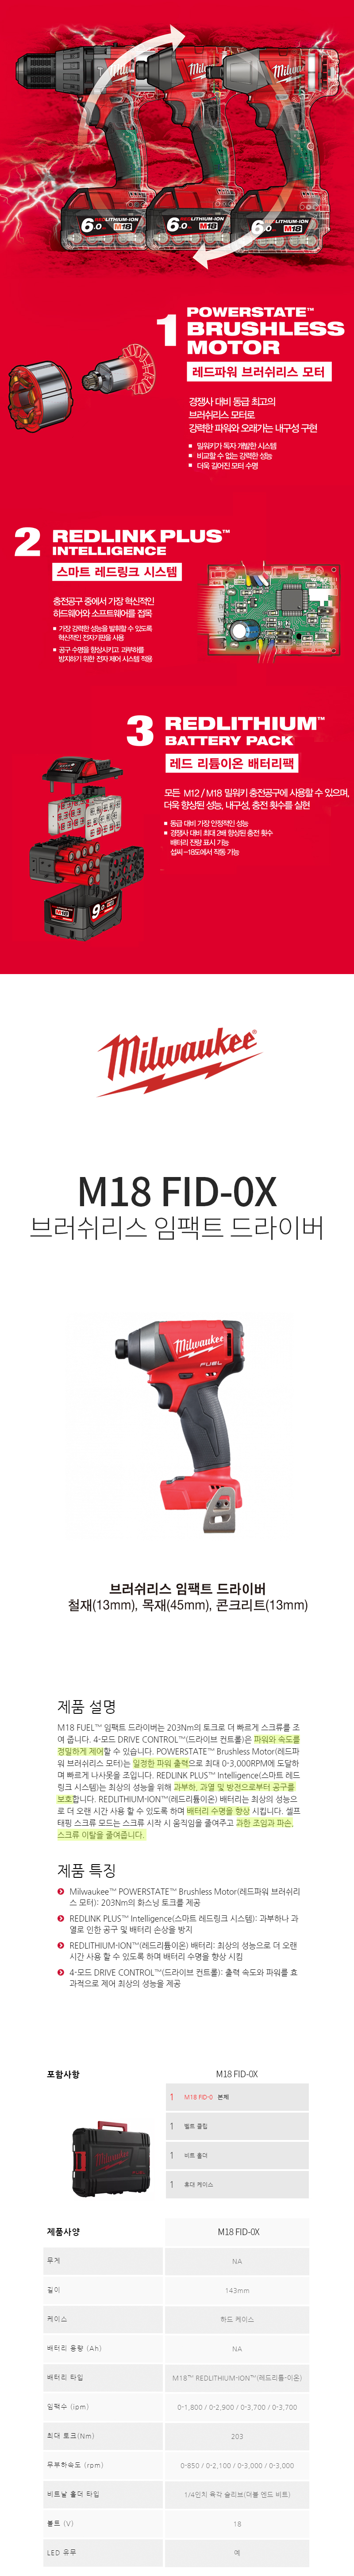 m18fid-0x-.jpg